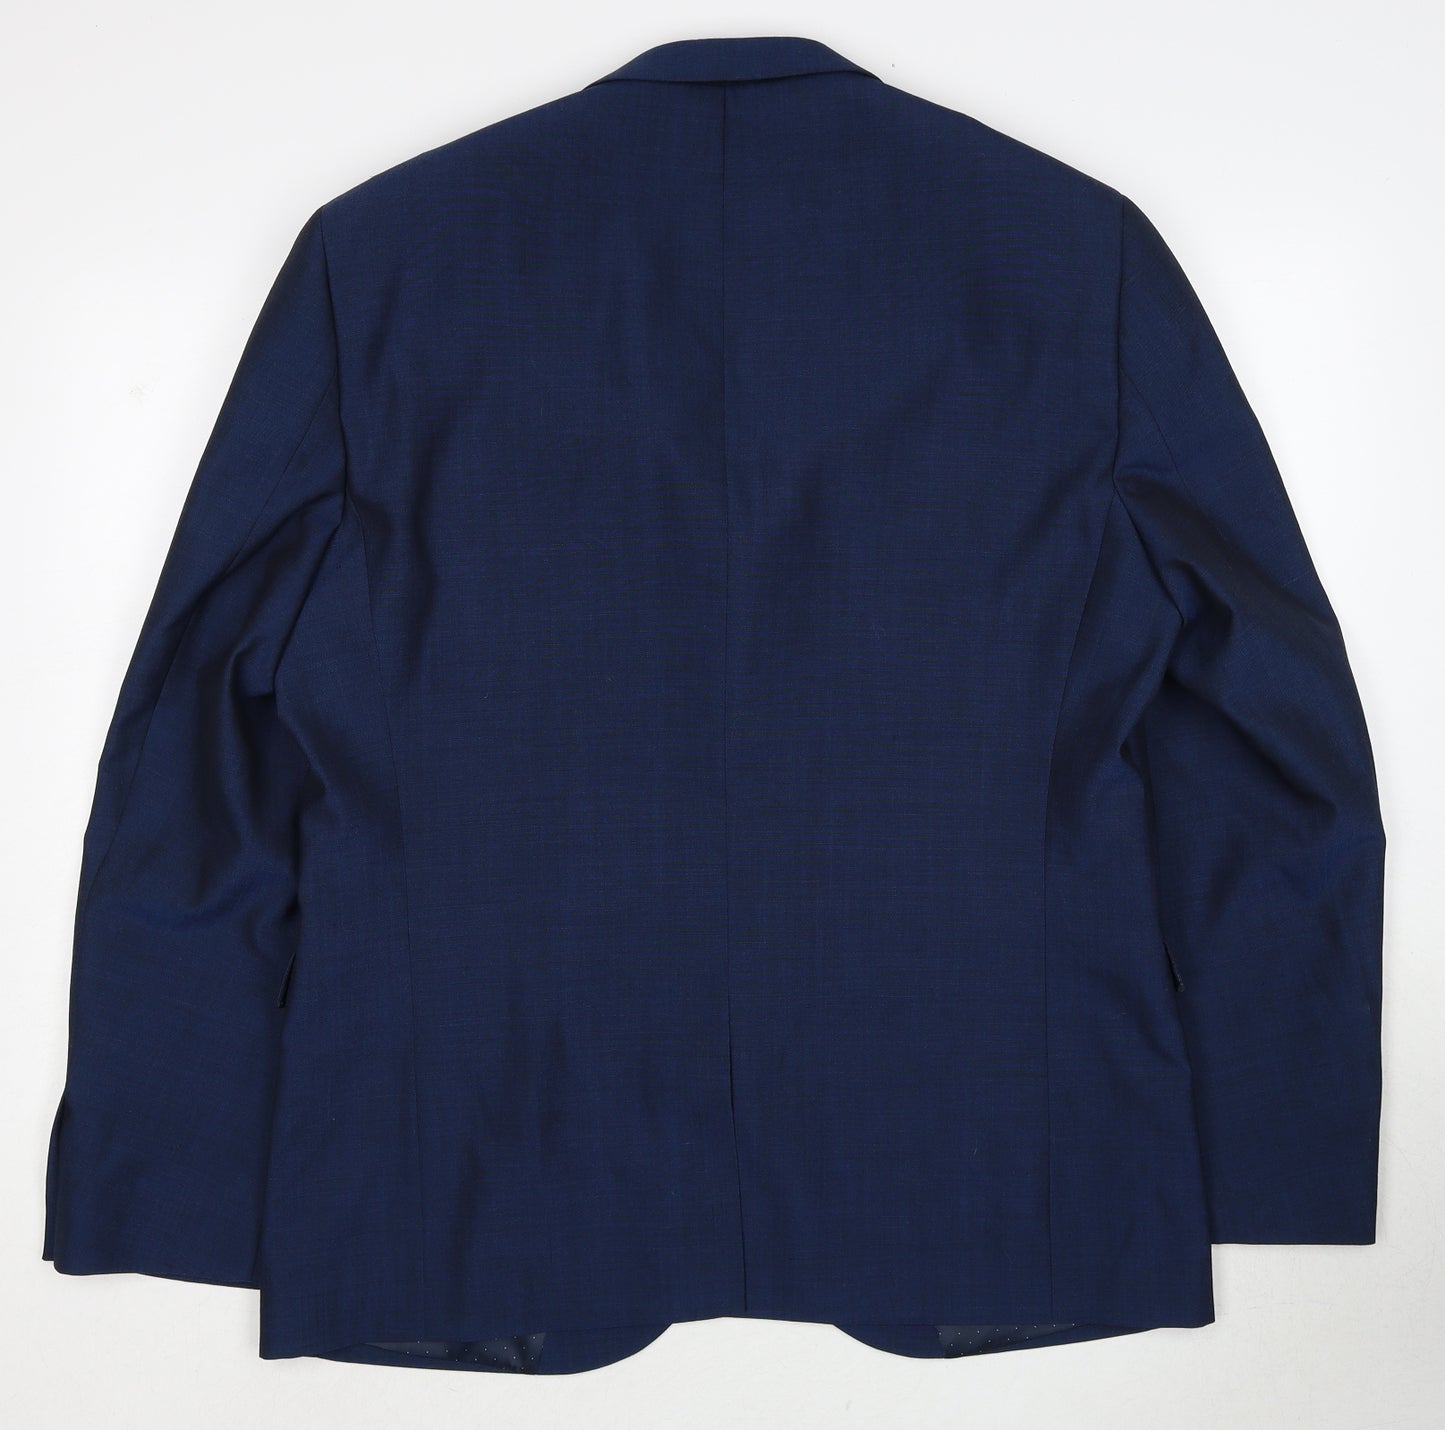 NEXT Mens Blue Wool Jacket Suit Jacket Size 44 Regular